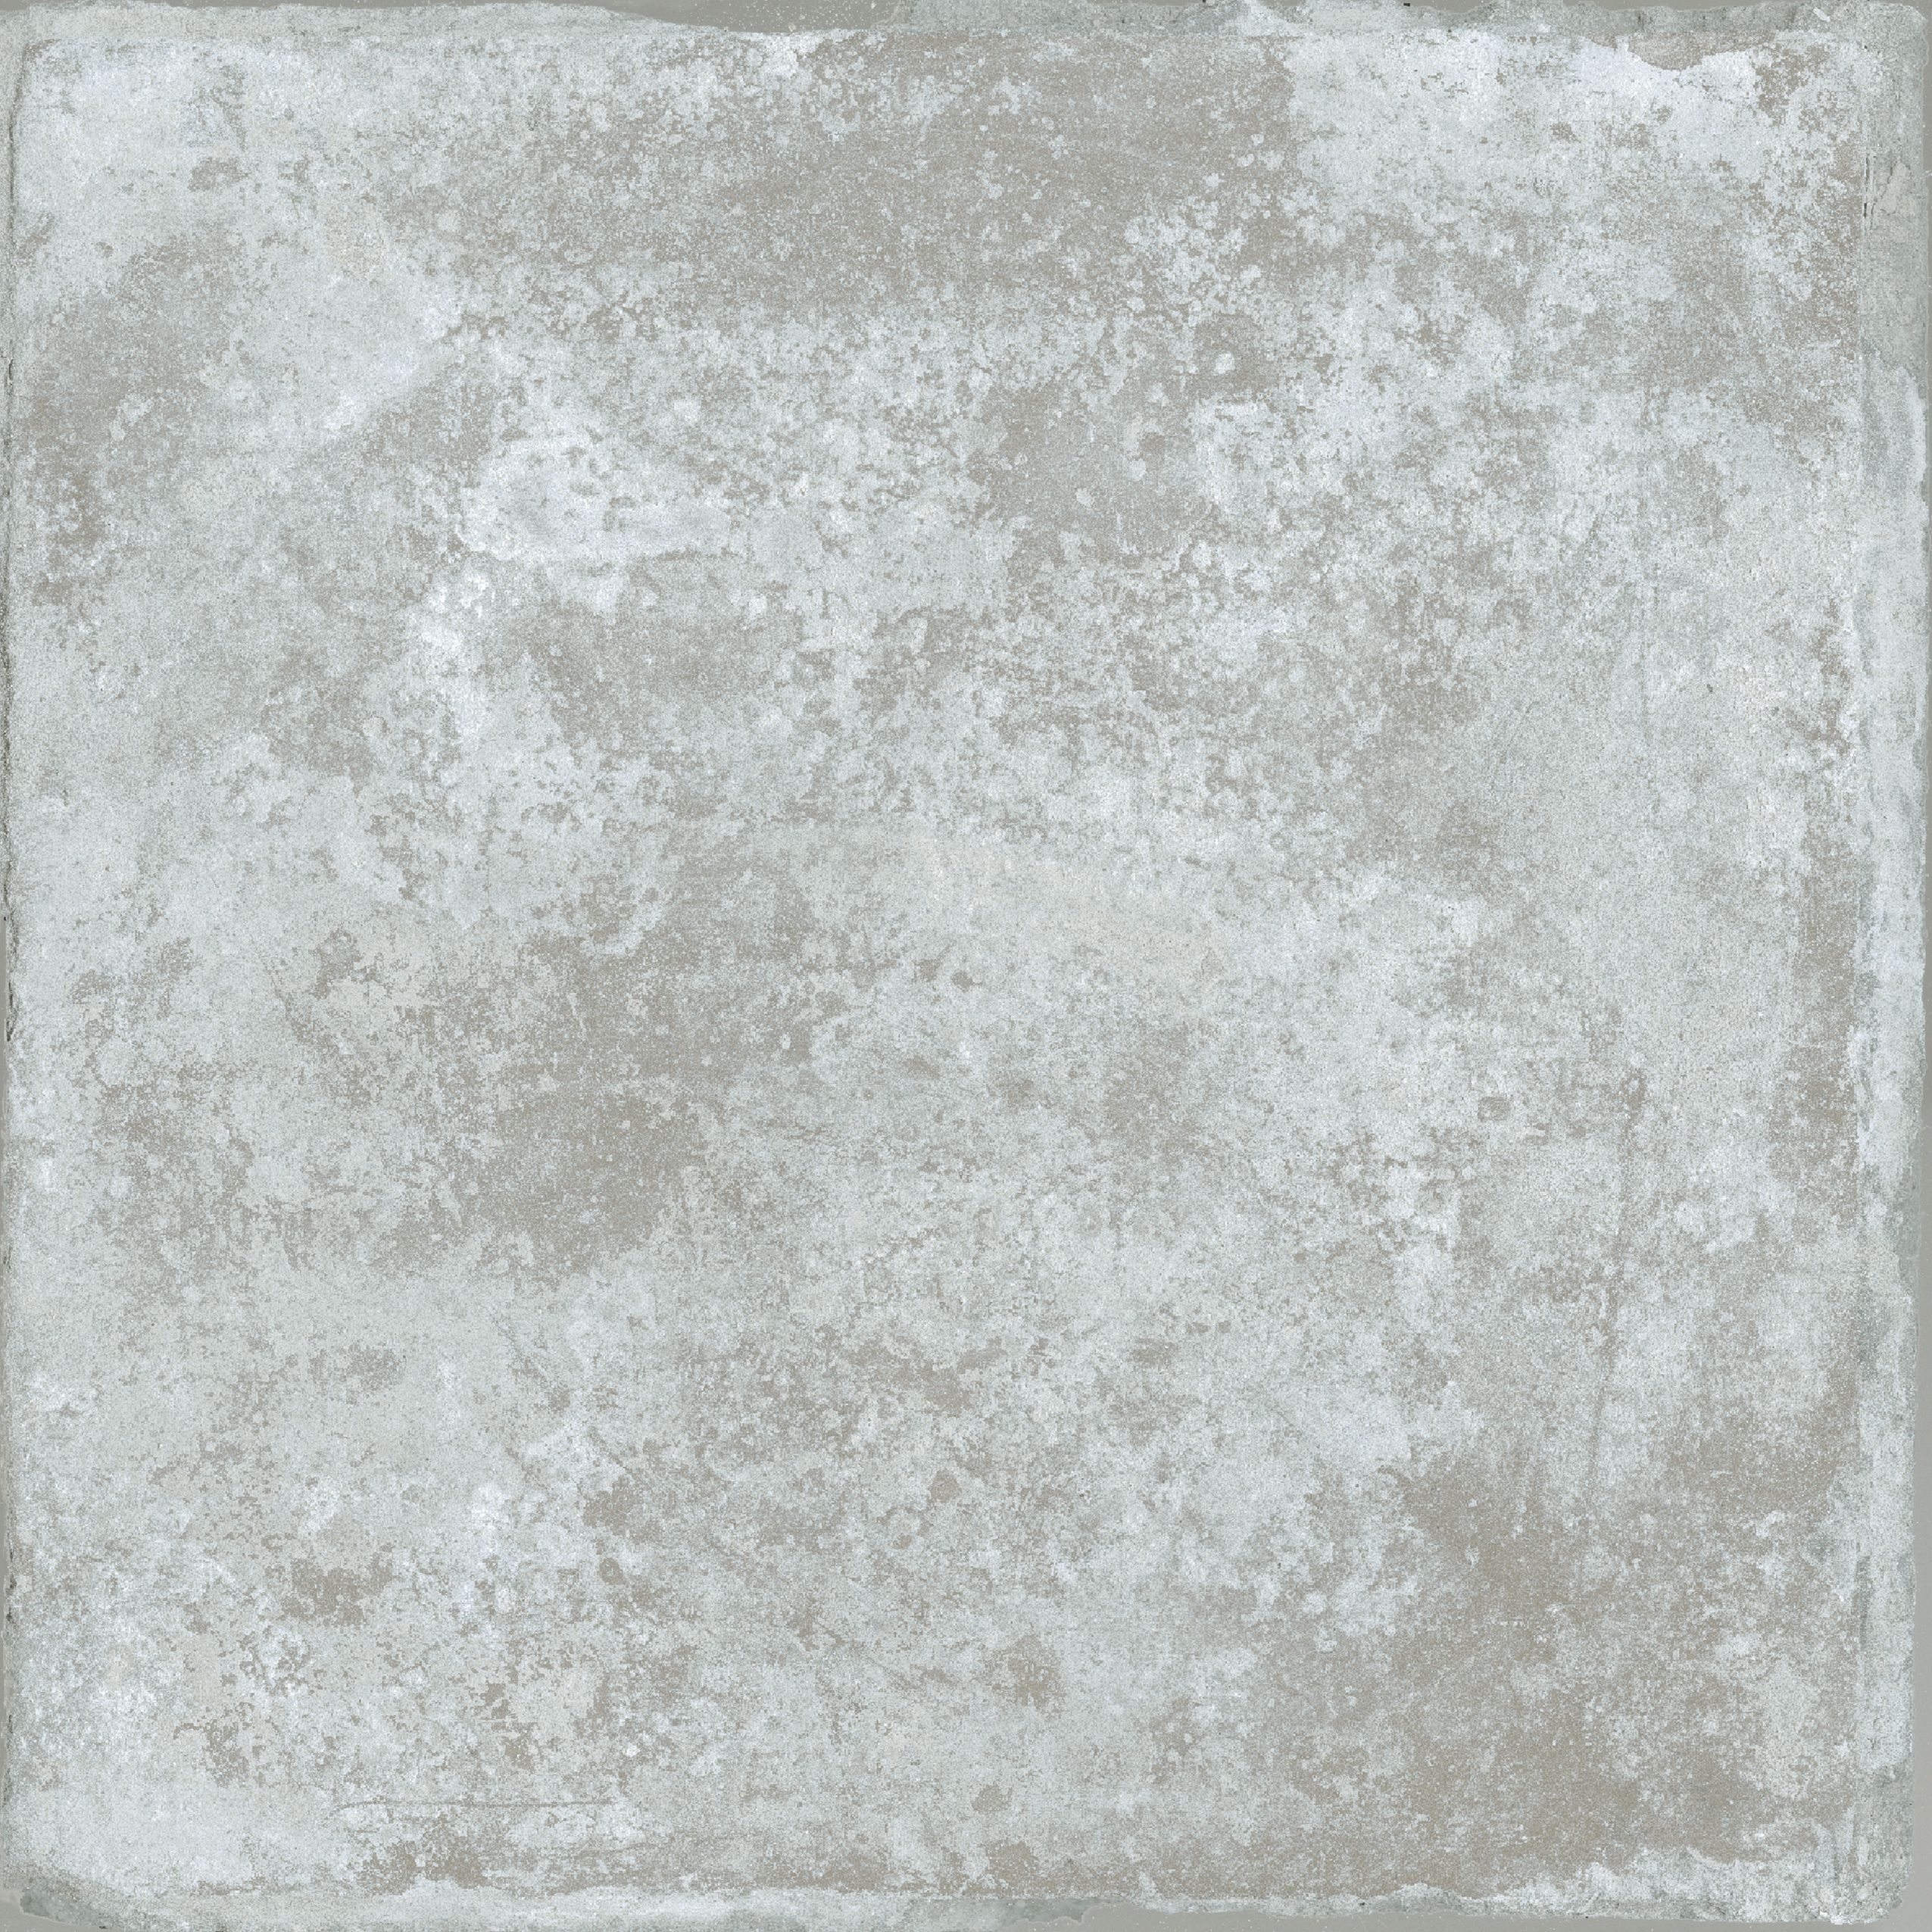 Johnson Tiles Matt Concrete effect Textured Porcelain Indoor Wall Tile, (L)200mm (W)200mm, 1.04m²